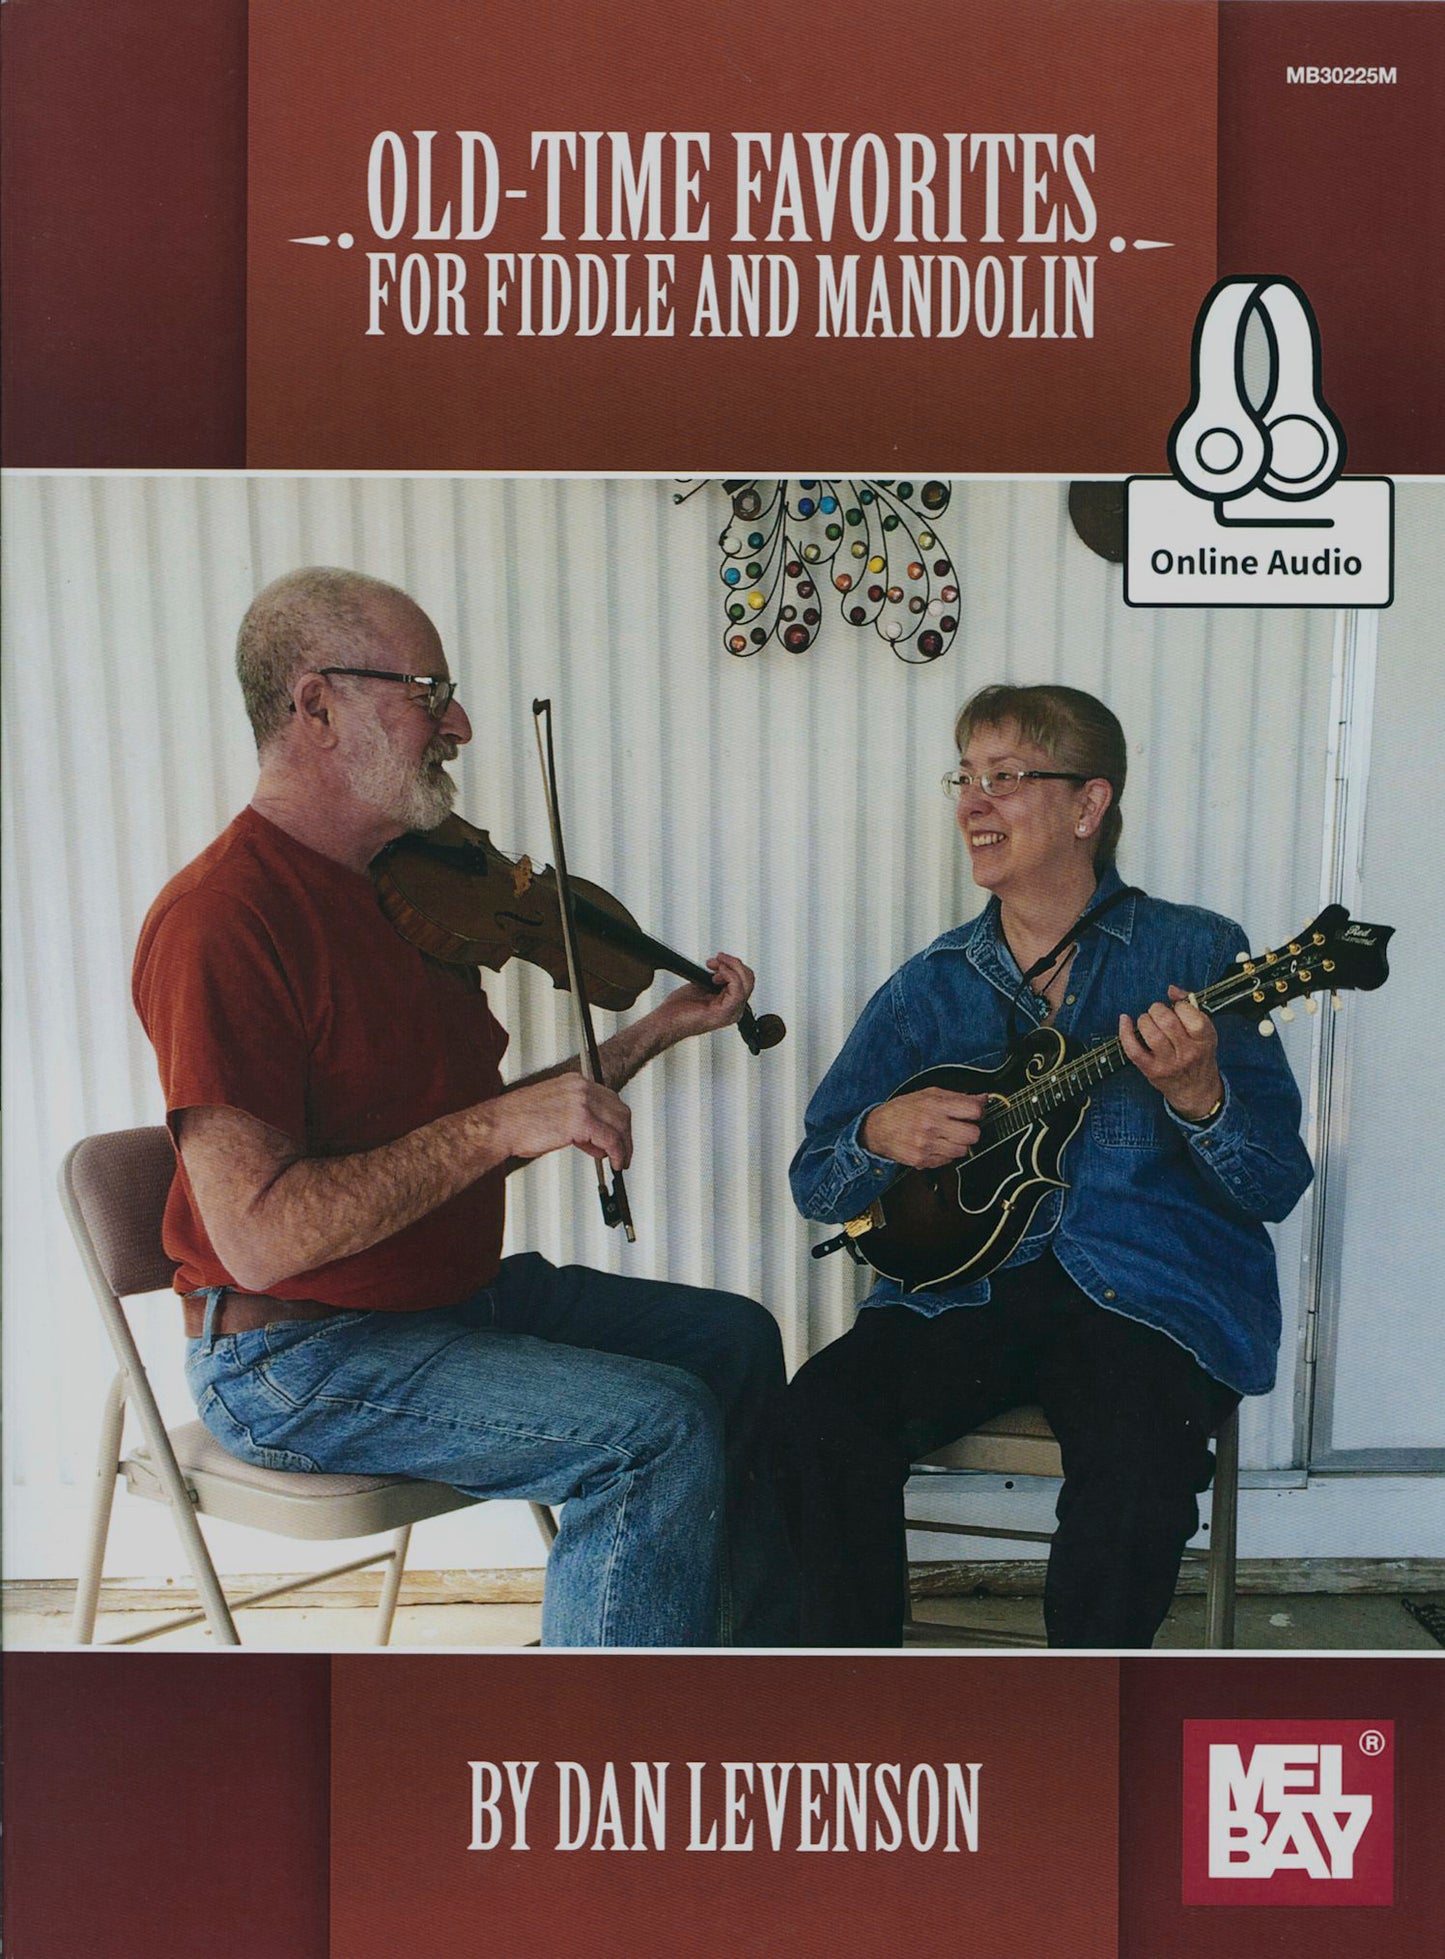 Image 1 of Old-Time Favorites for Fiddle and Mandolin - SKU# 02-30225M : Product Type Media : Elderly Instruments